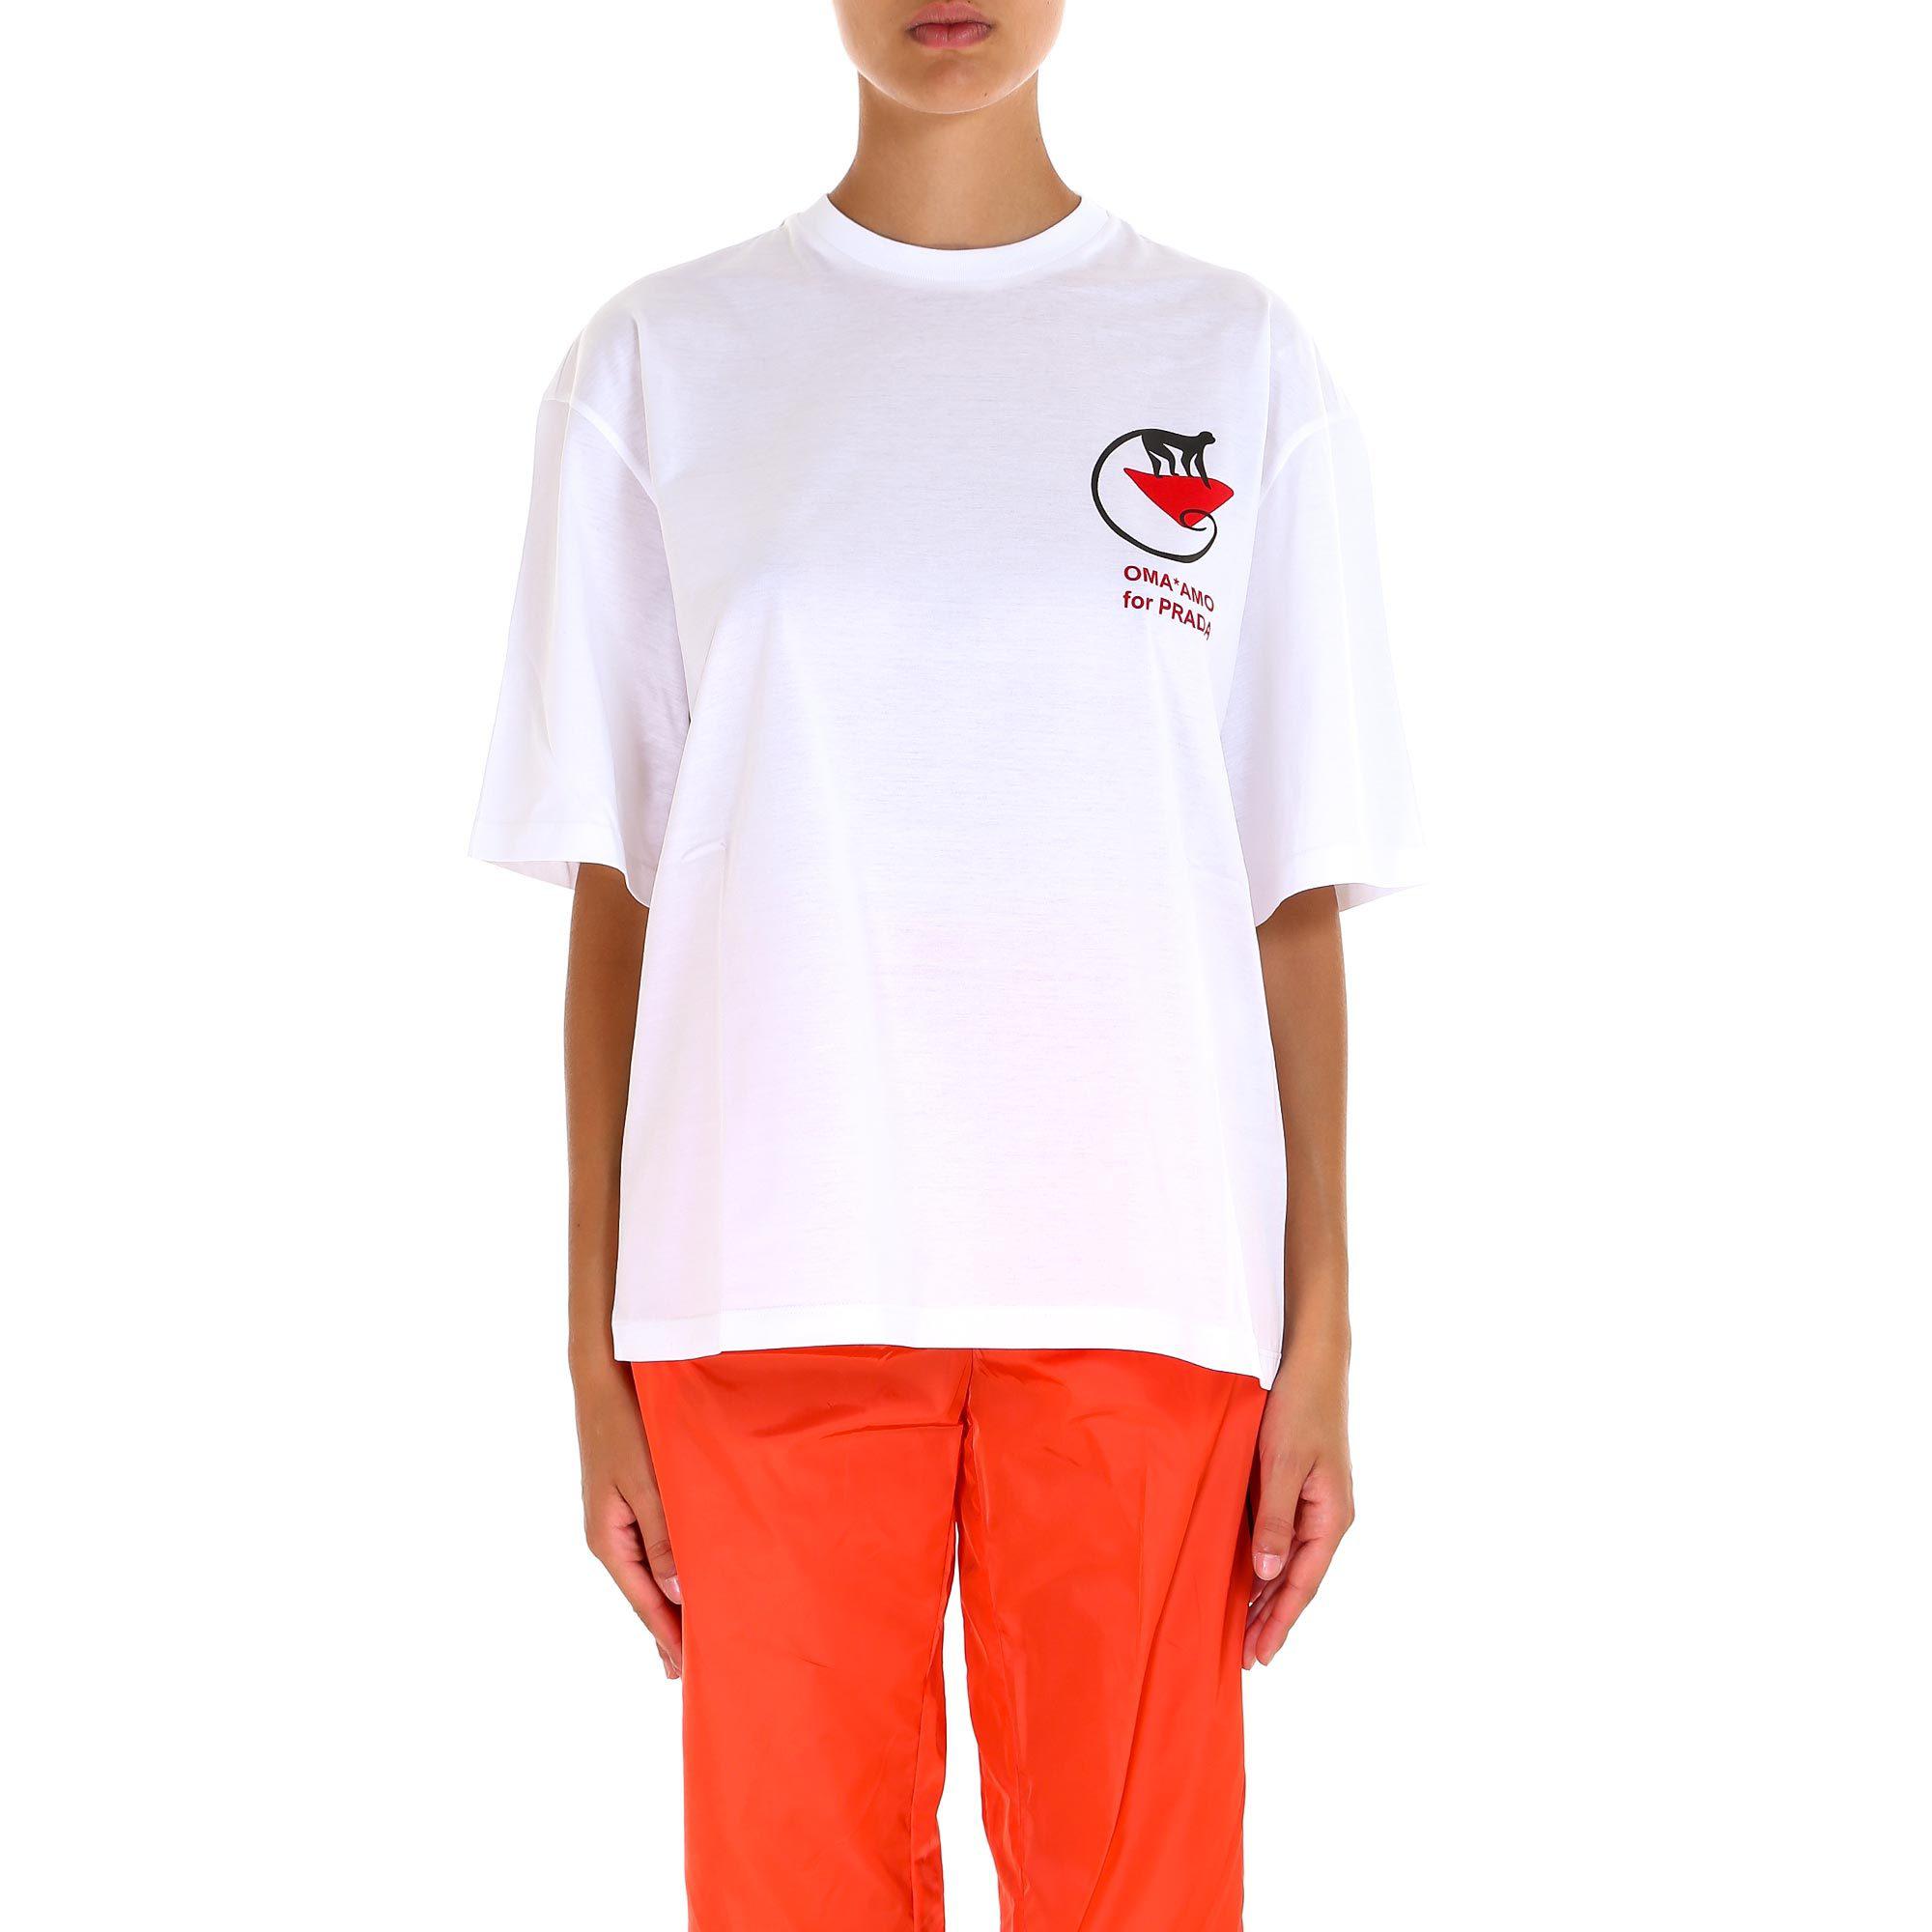 Prada Oma Amo For T-shirt in White | Lyst